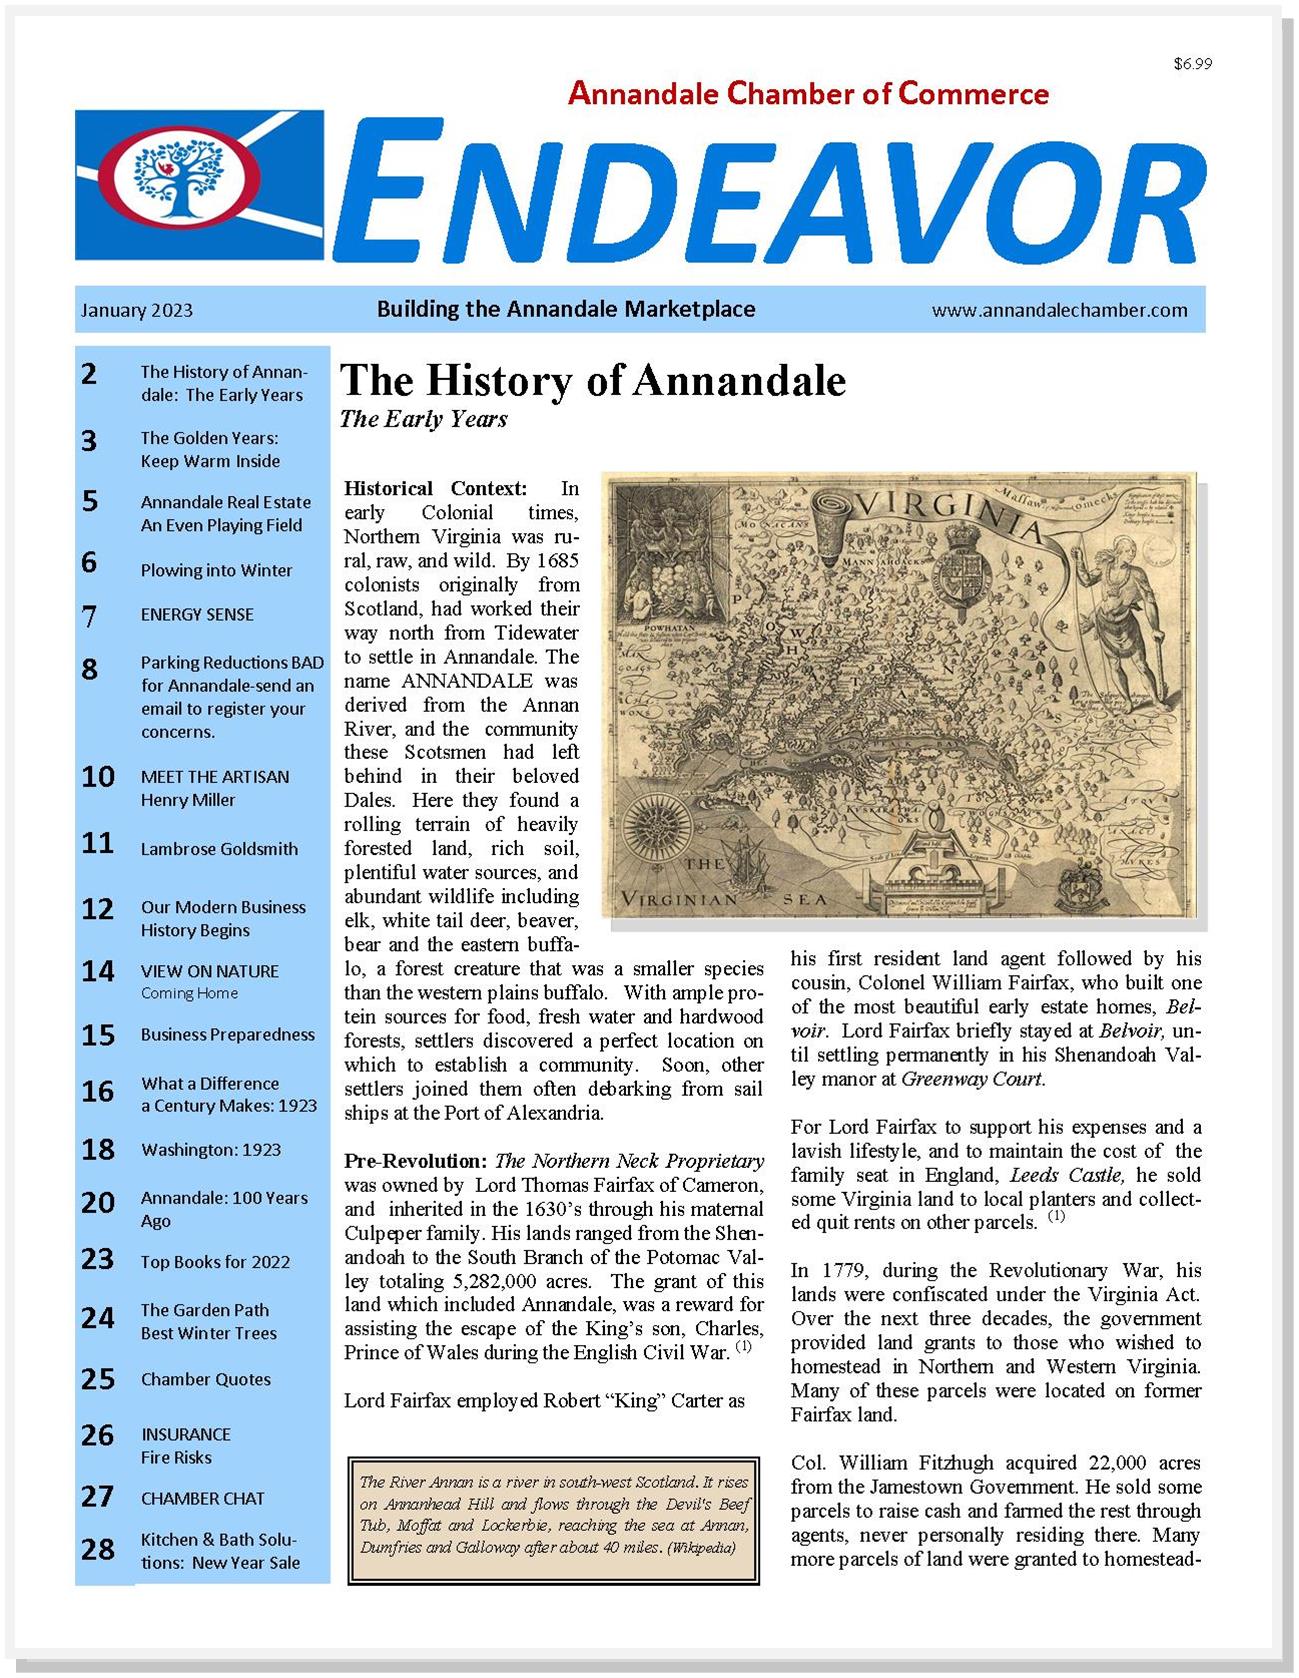 The ENDEAVOR News Magazine